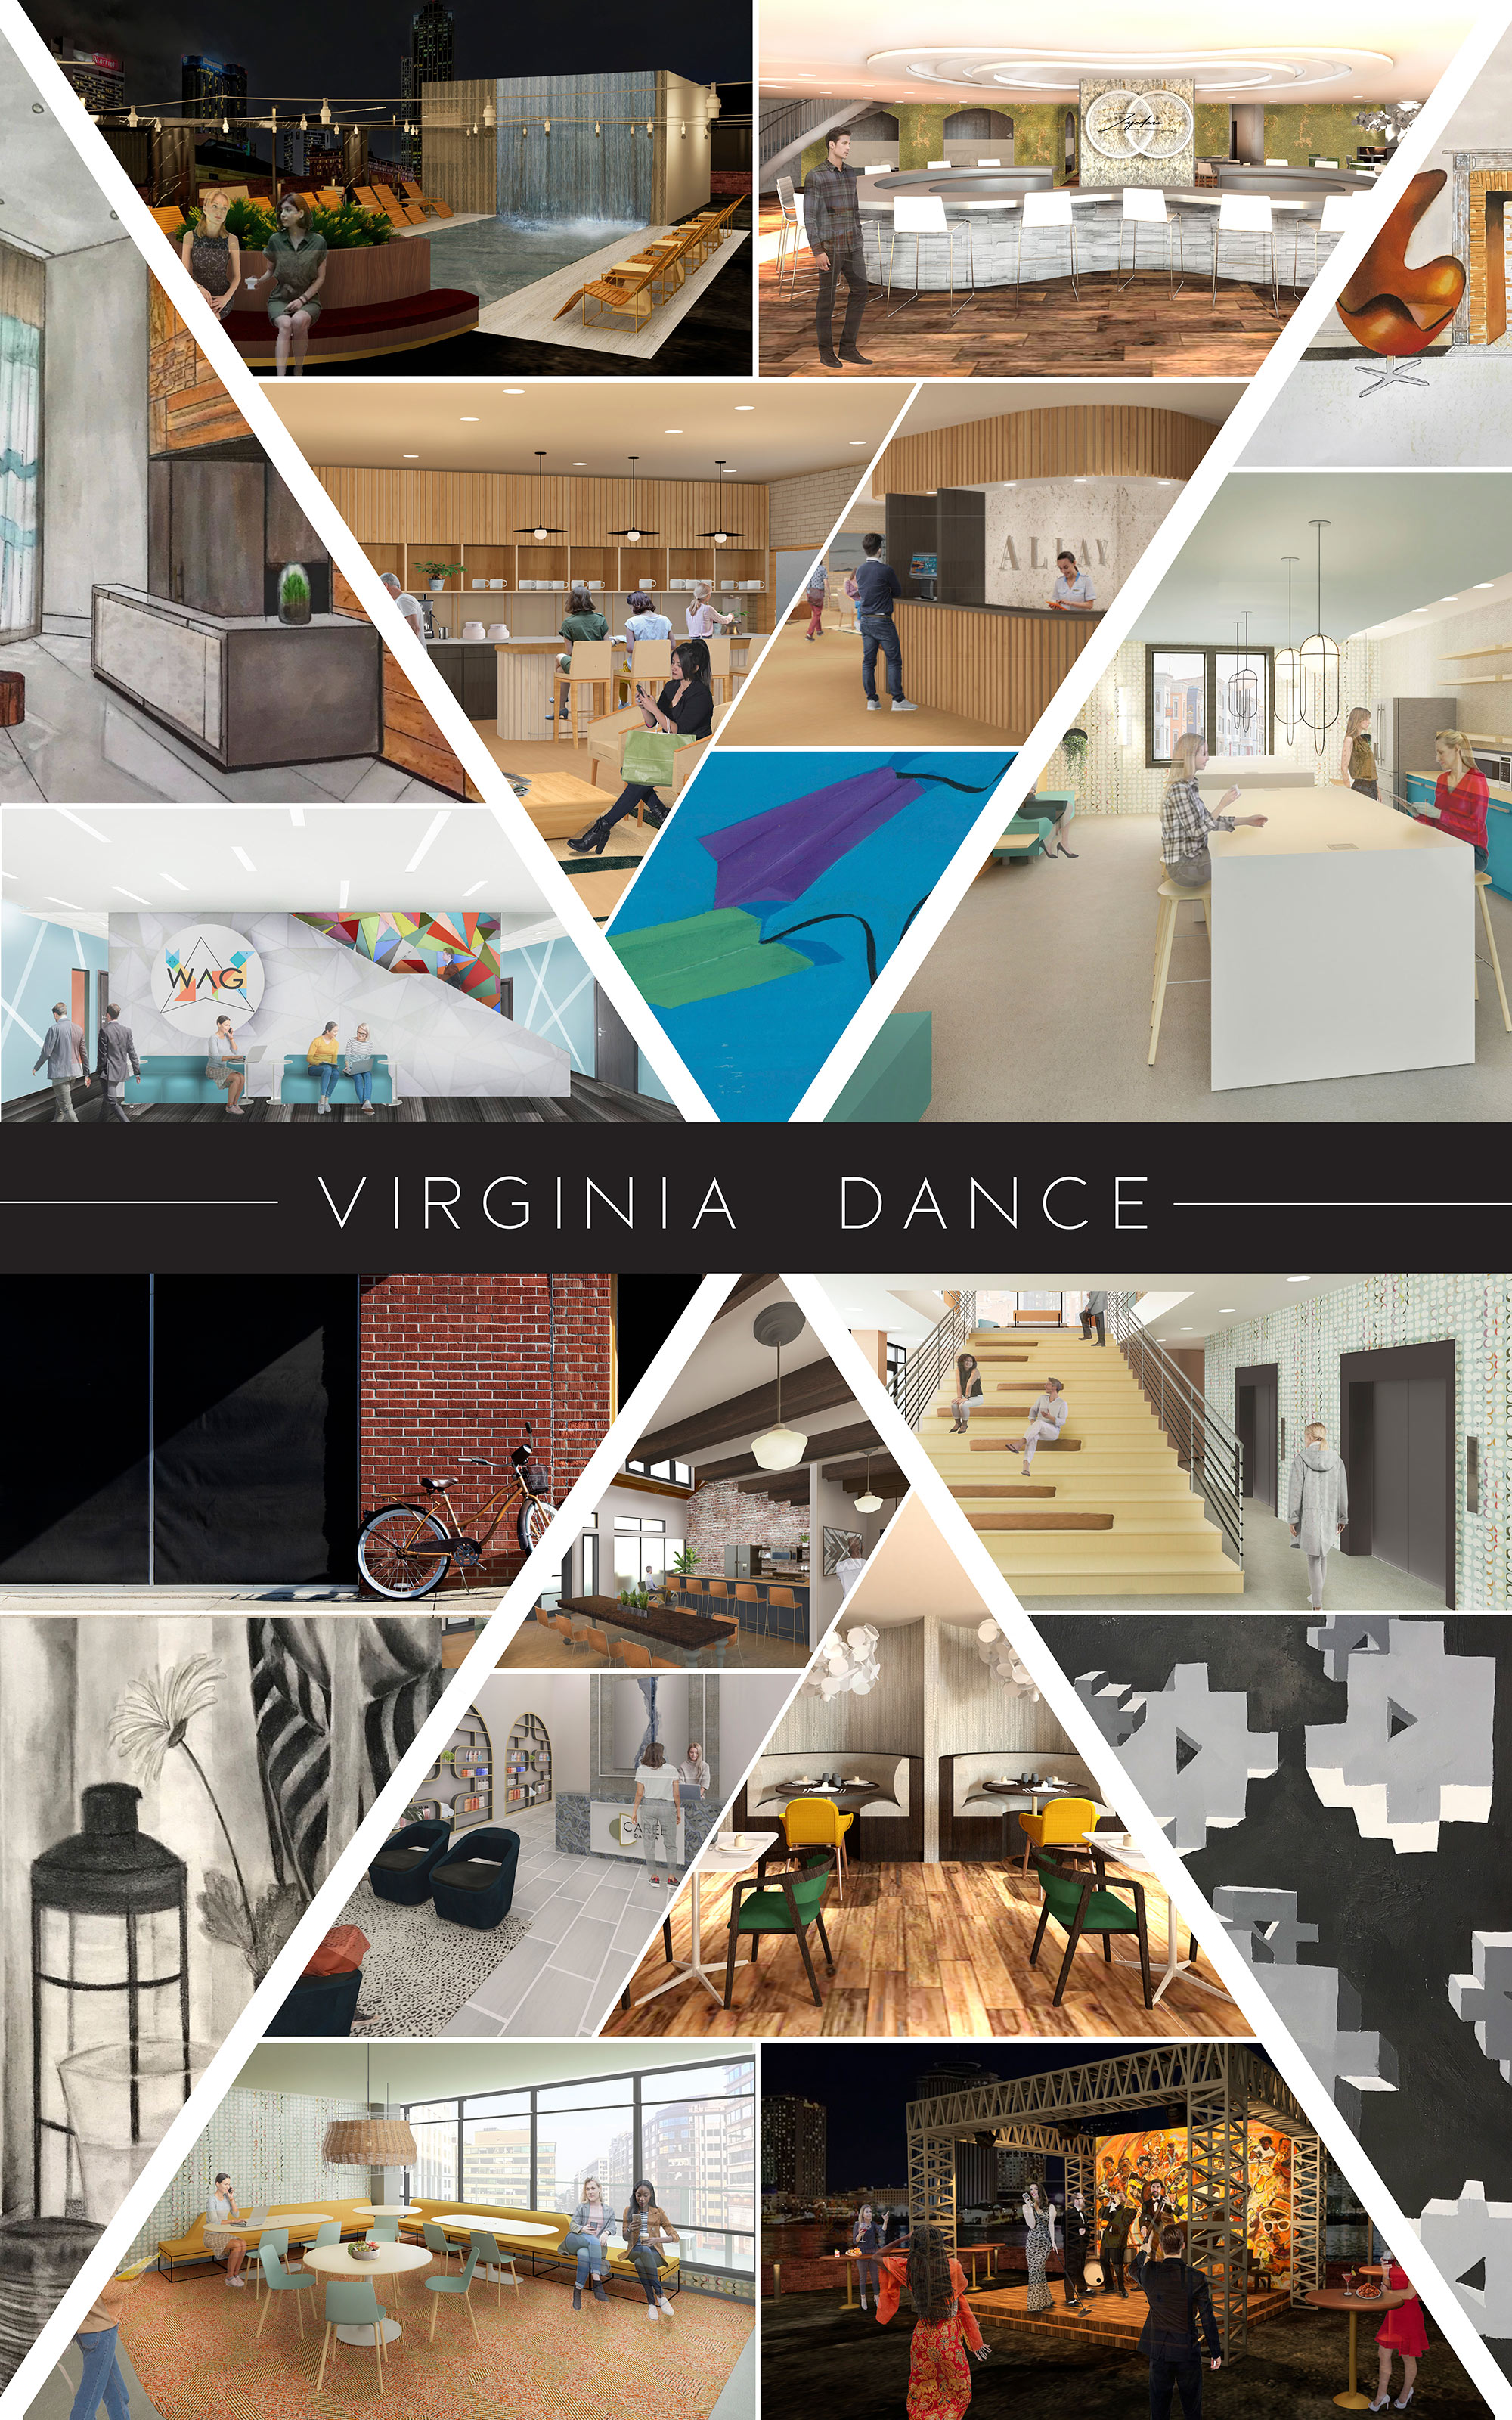 Virginia Dance's senior exhibit board